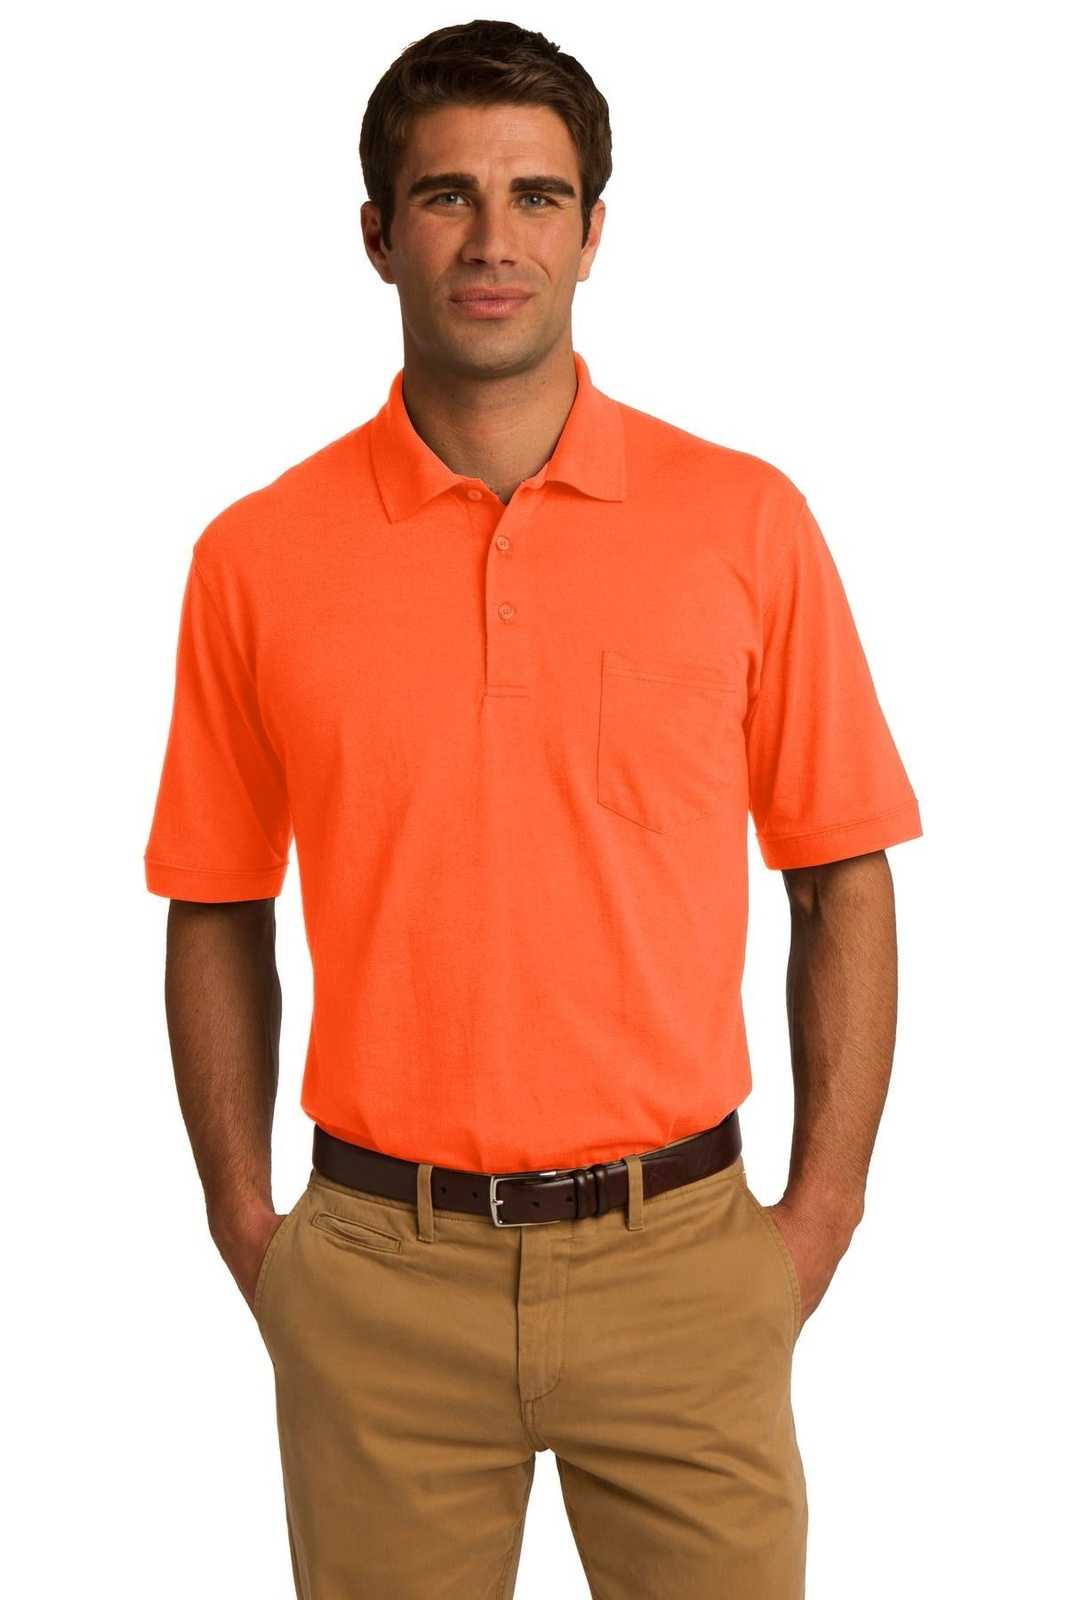 Port & Company KP55P Core Blend Jersey Knit Pocket Polo - Safety Orange - HIT a Double - 1